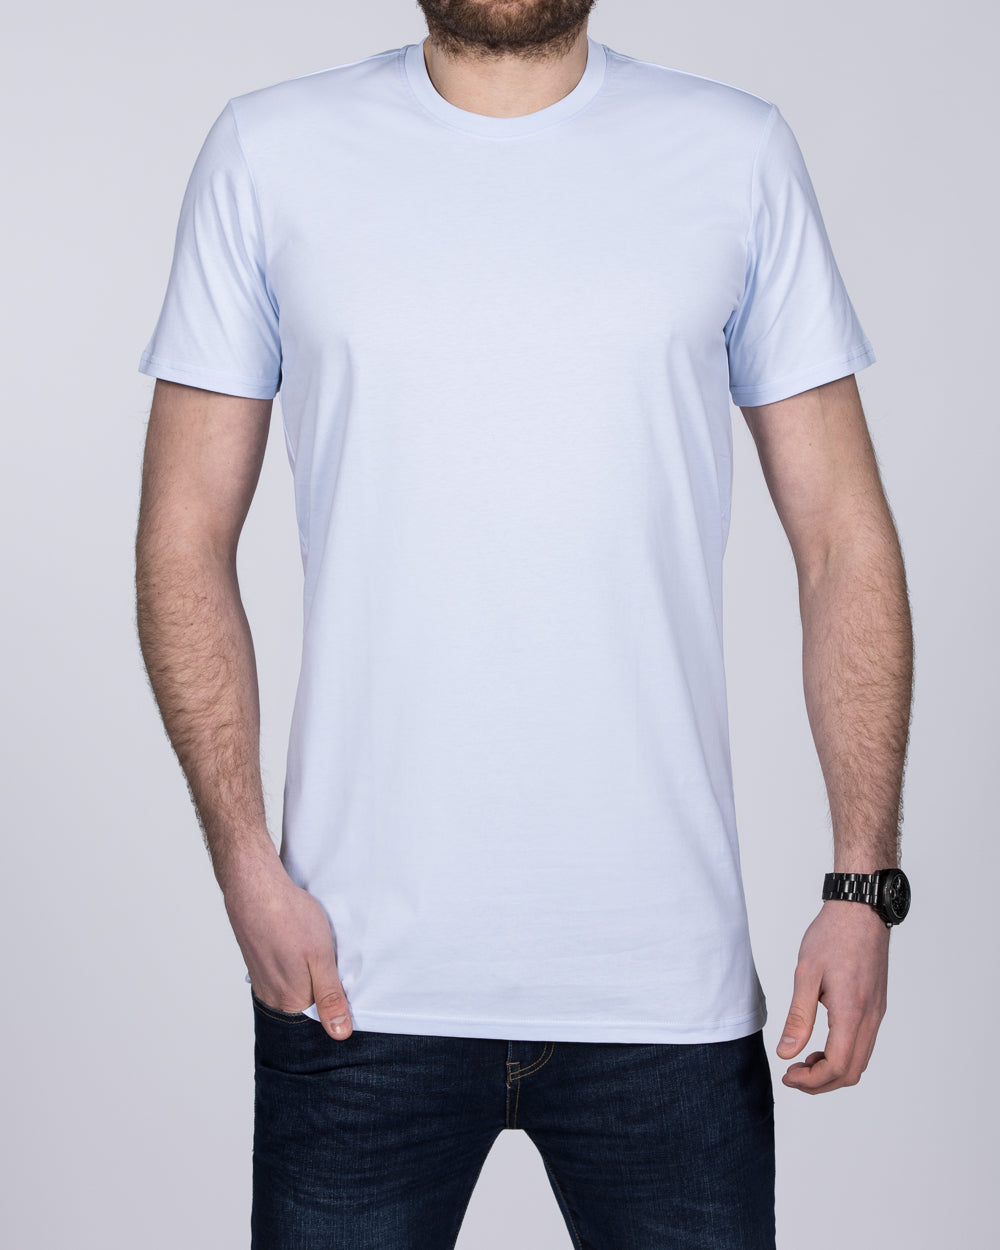 Girav Sydney Tall T-Shirt (sky blue)